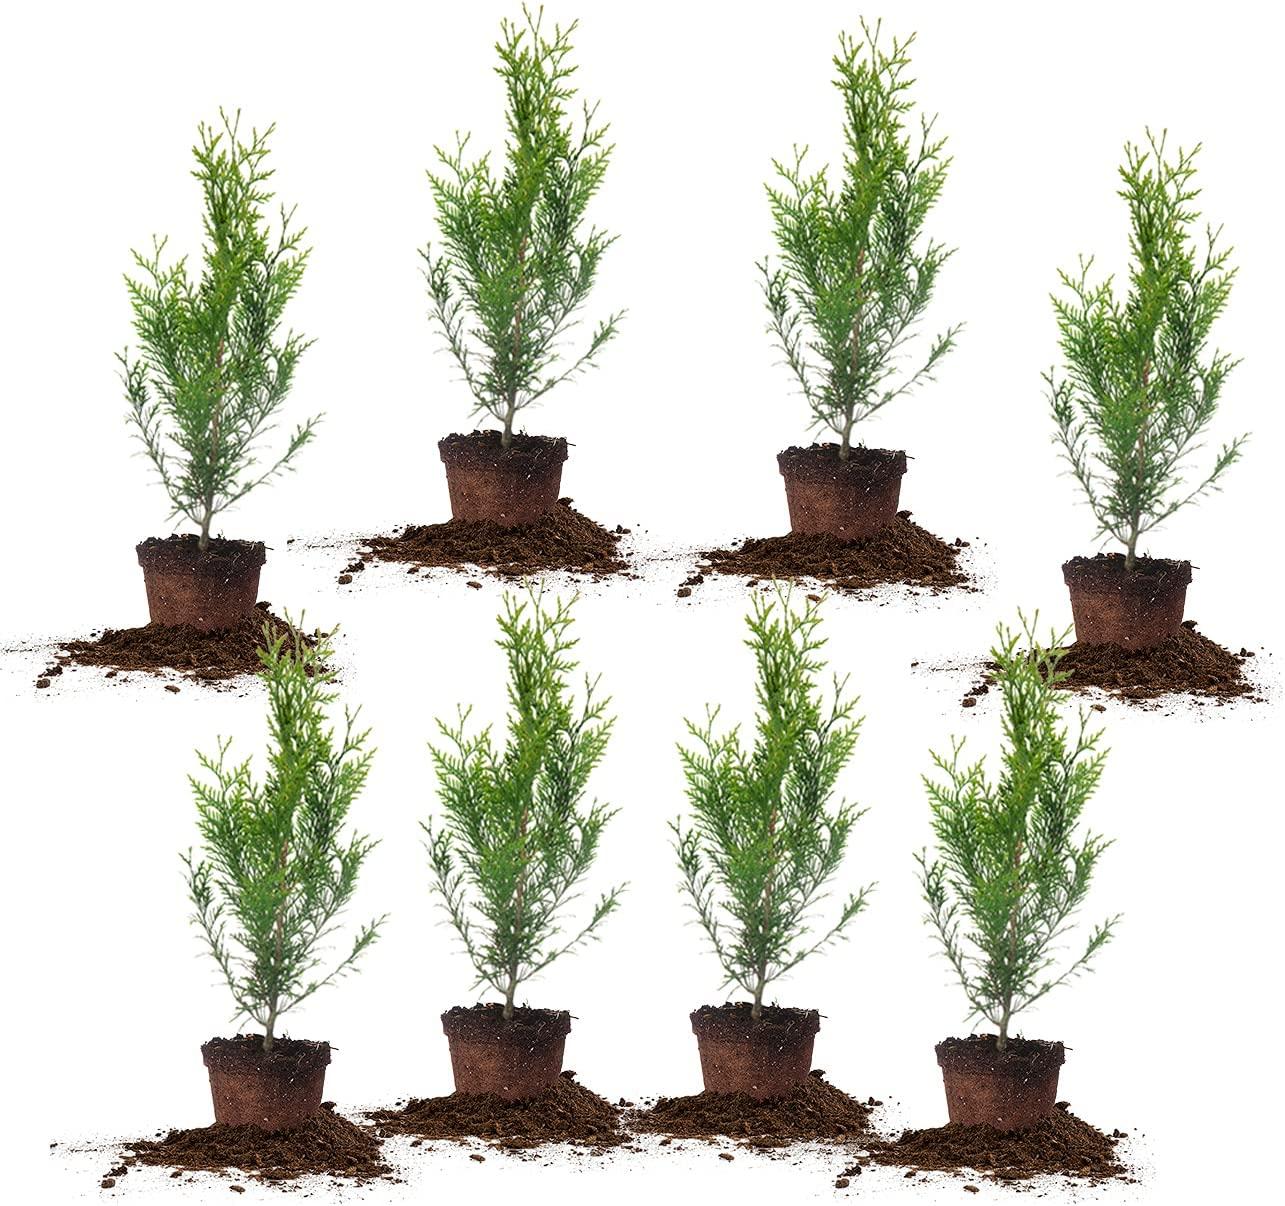 Perfect Plants Thuja Green Giant Evergreen Arborvitae 8 Pack for $79.99 Shipped